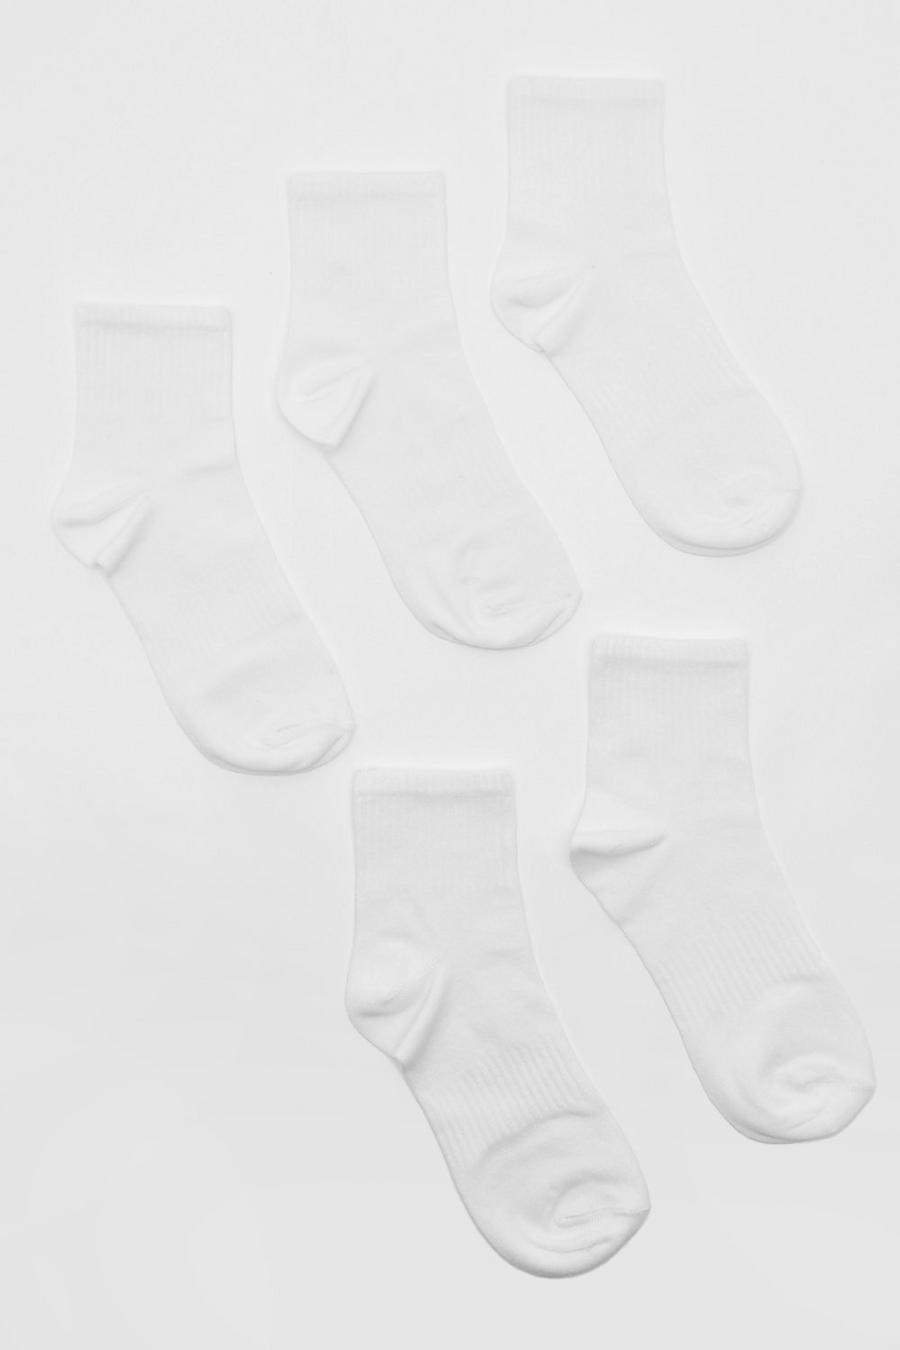 Pack de 5 pares de calcetines deportivos blancos tobilleros lisos, White blanco